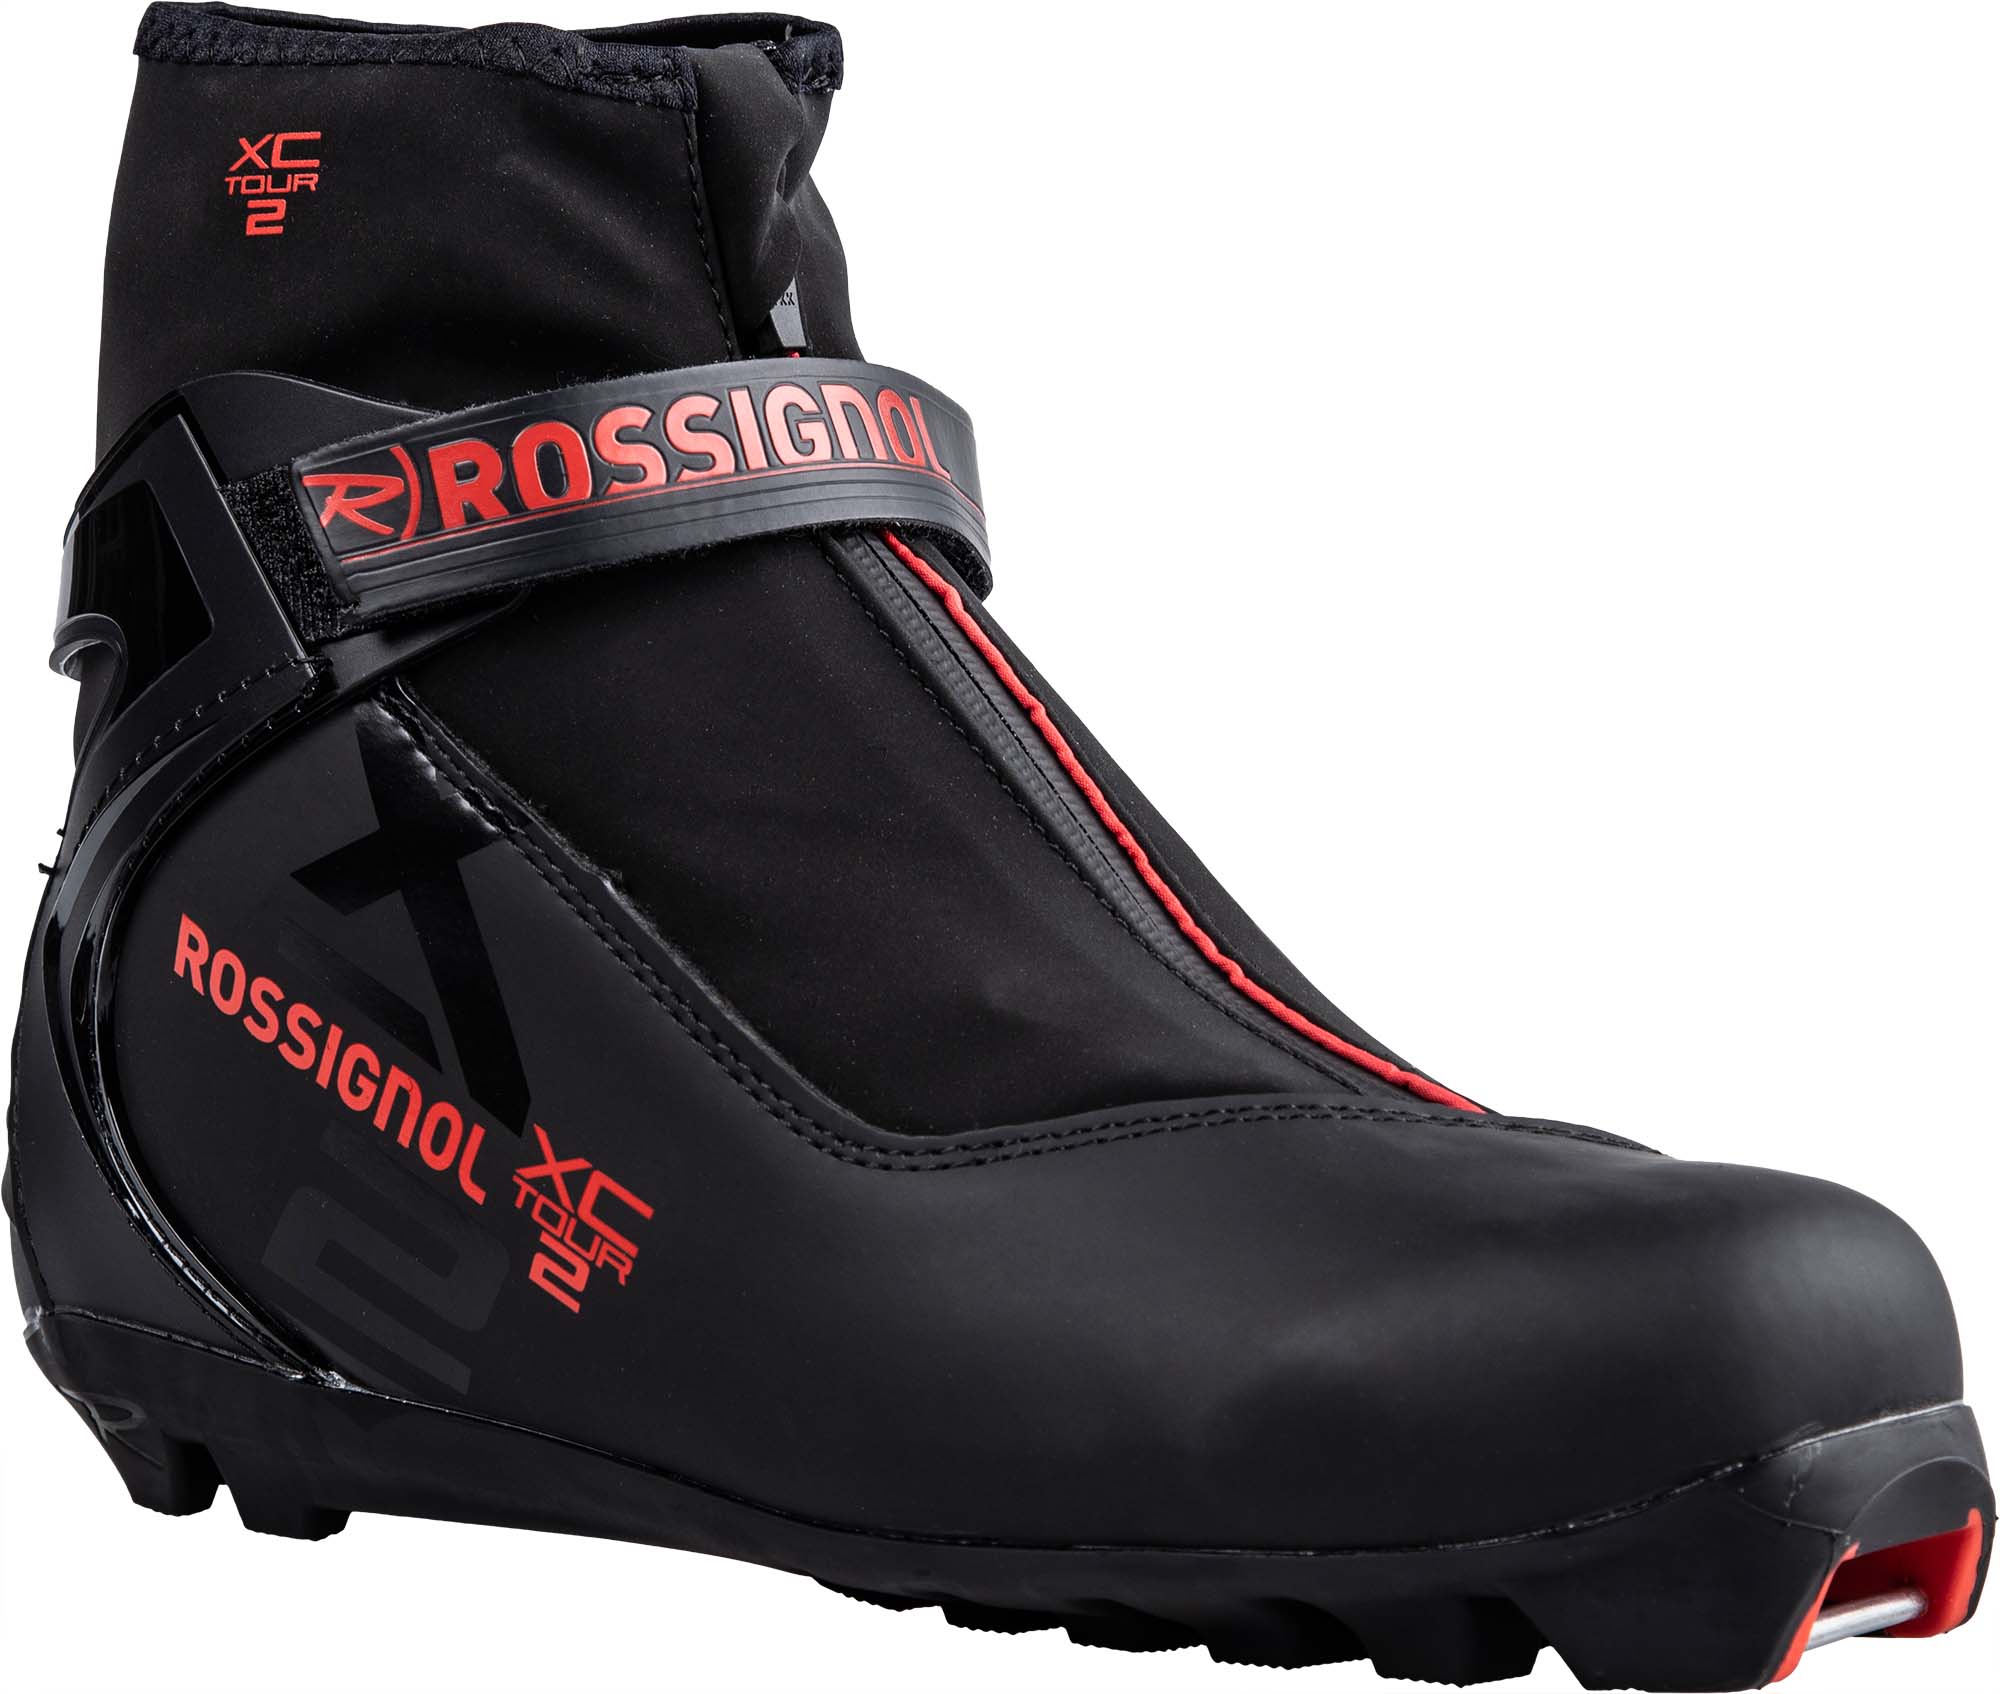 Unisex nordic ski boots